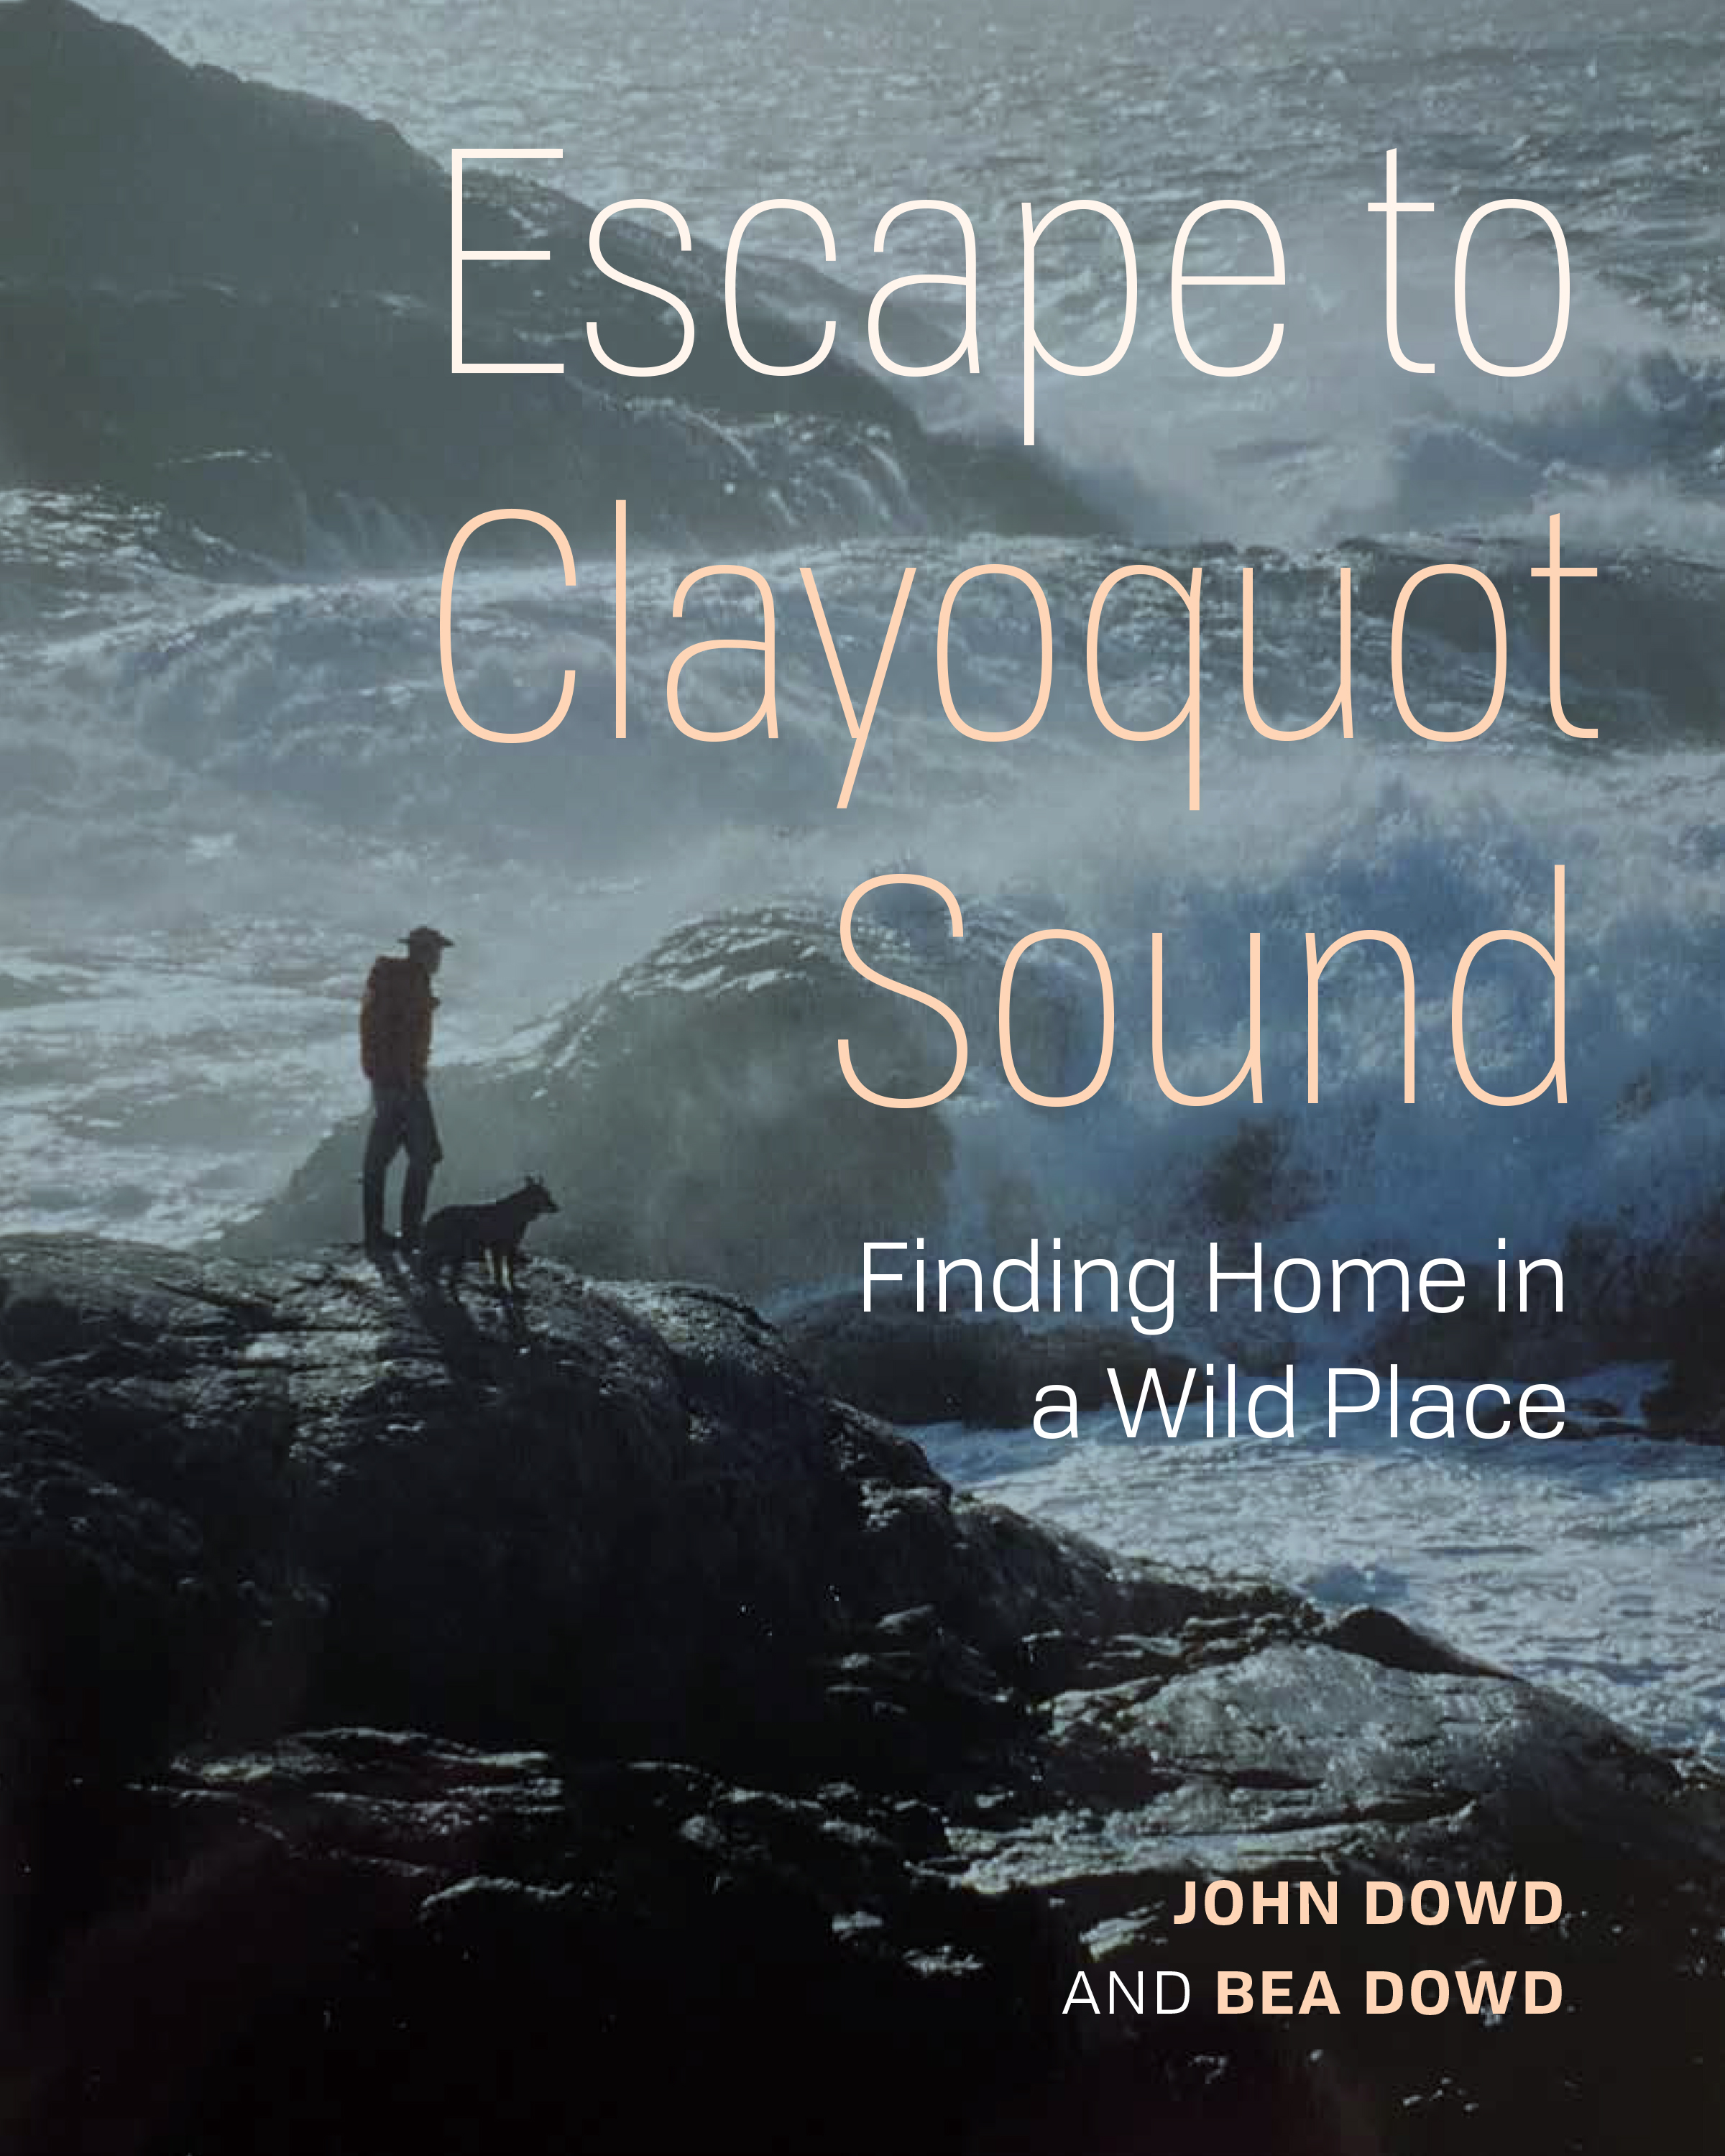 Escape to Clayoquot Sound